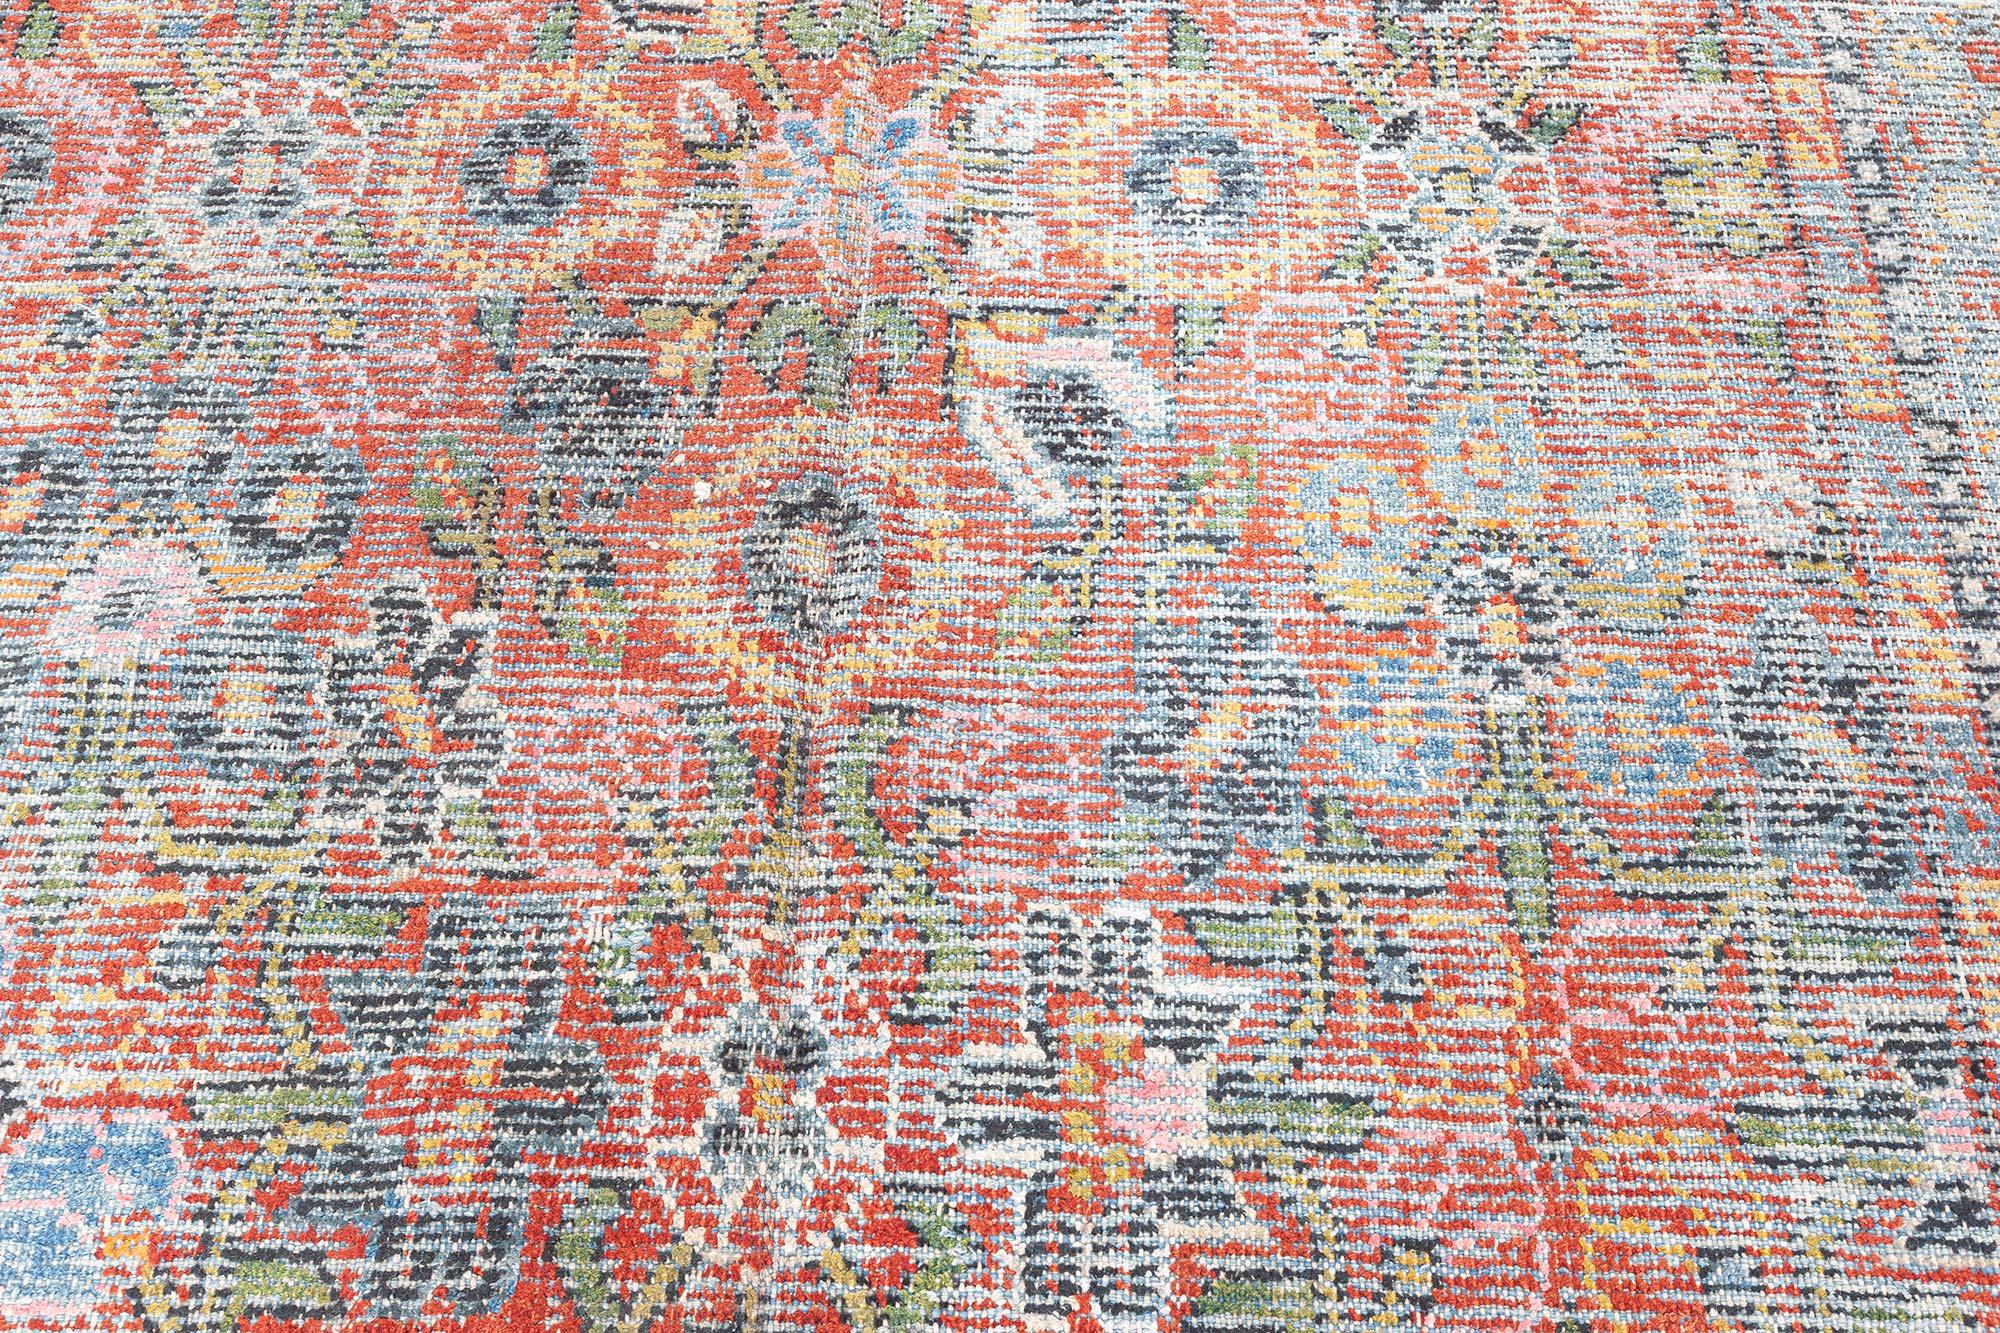 Authentic 1850s Samarkand Handmade Silk Rug.
Size: 5'2